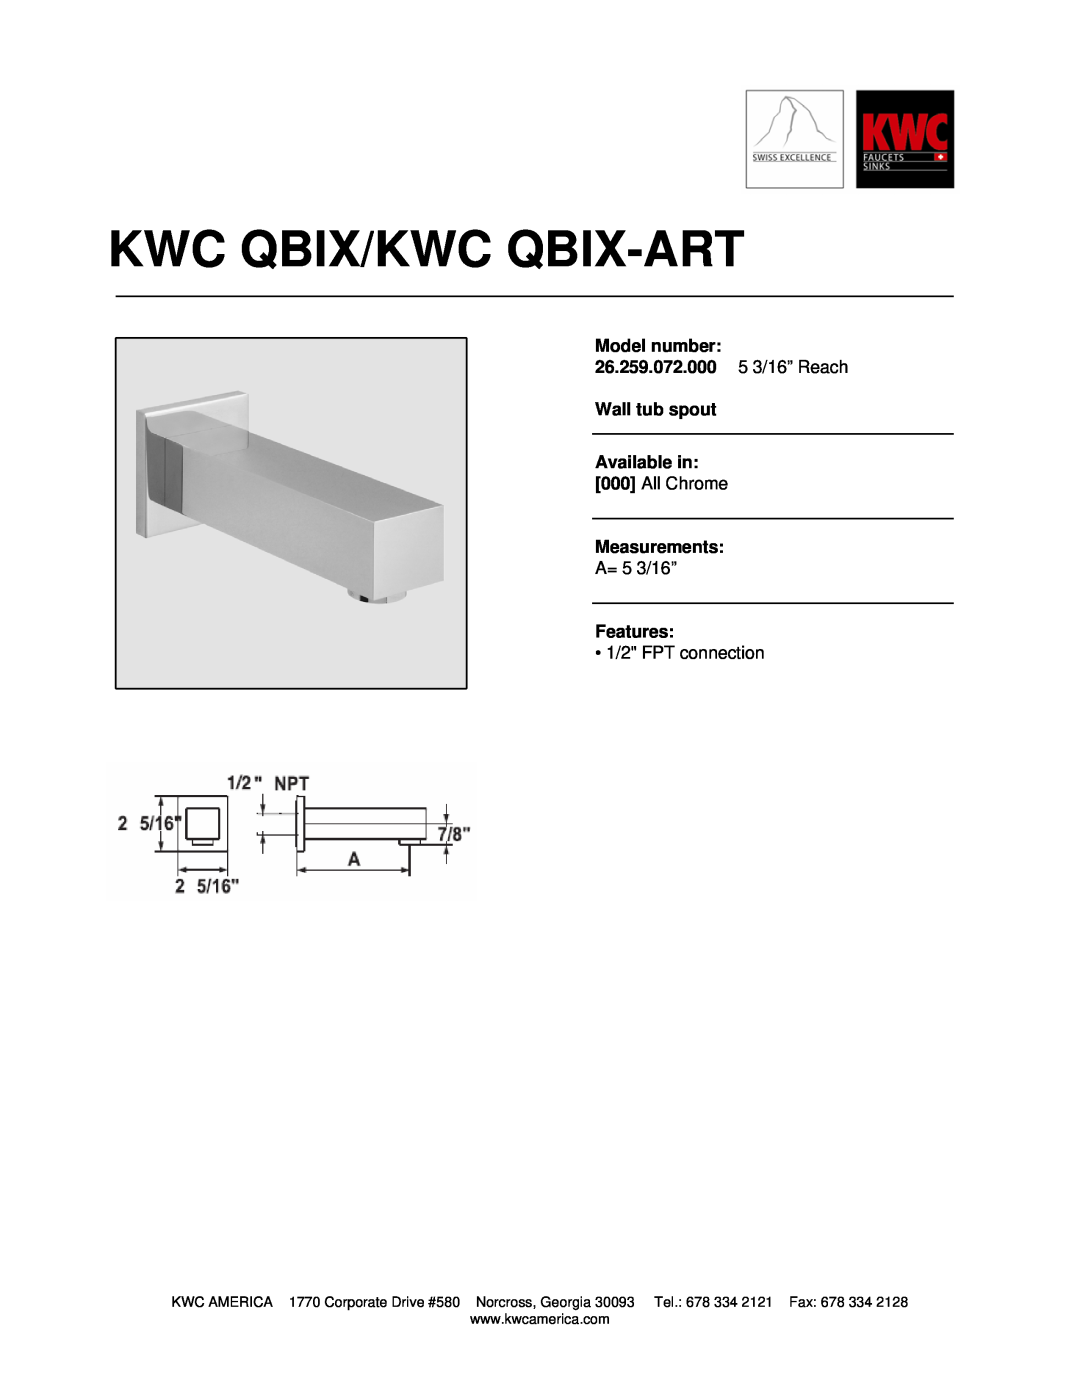 KWC manual Kwc Qbix/Kwc Qbix-Art, Model number 26.259.072.000 5 3/16” Reach, Wall tub spout Available in, All Chrome 